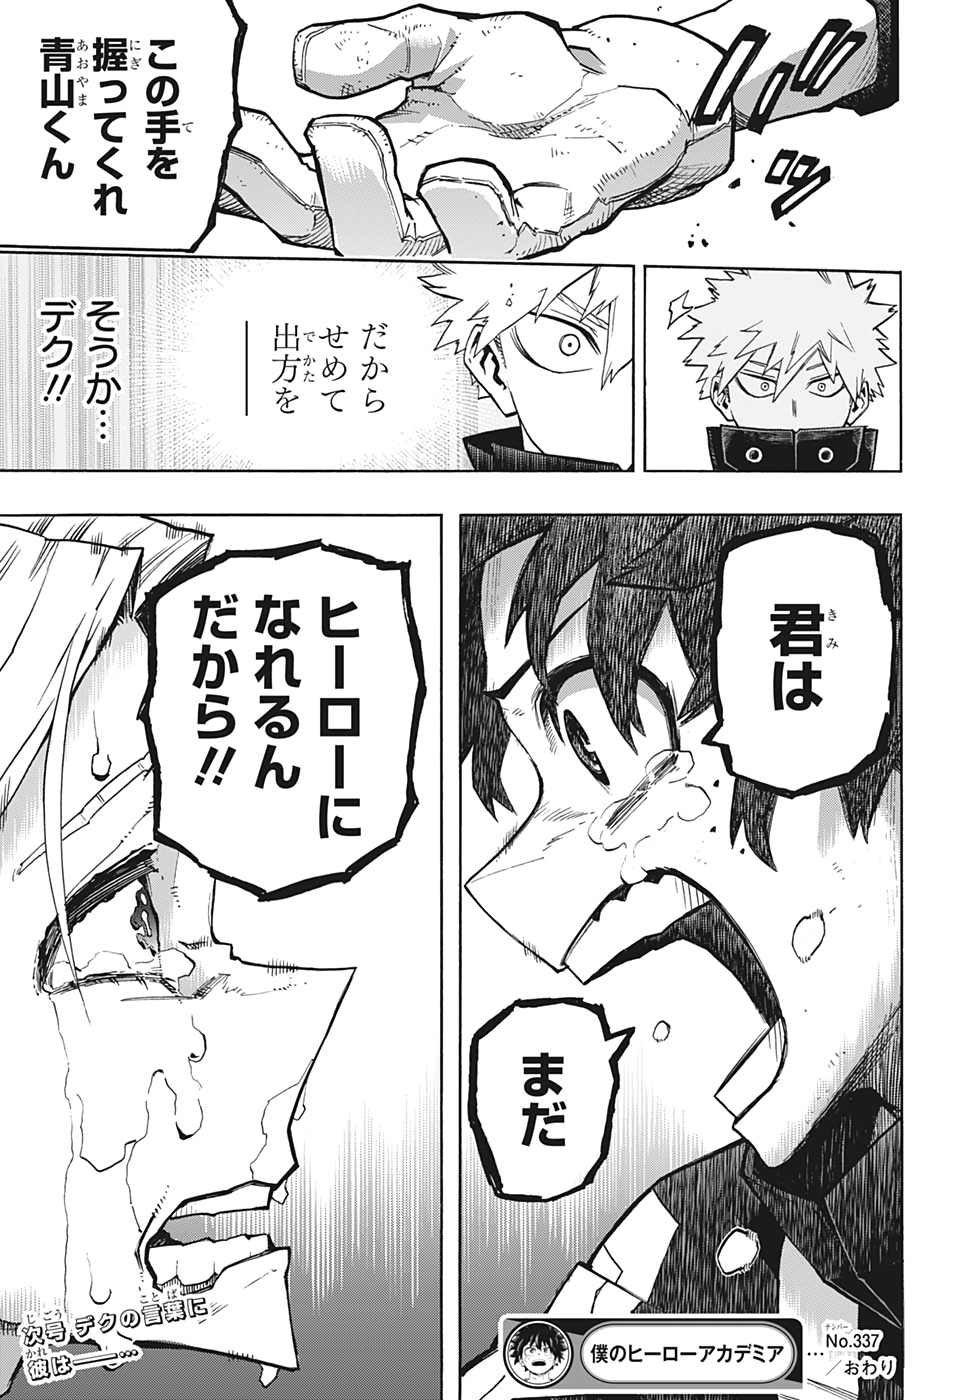 Boku no Hero Academia - Chapter 337 - Page 17